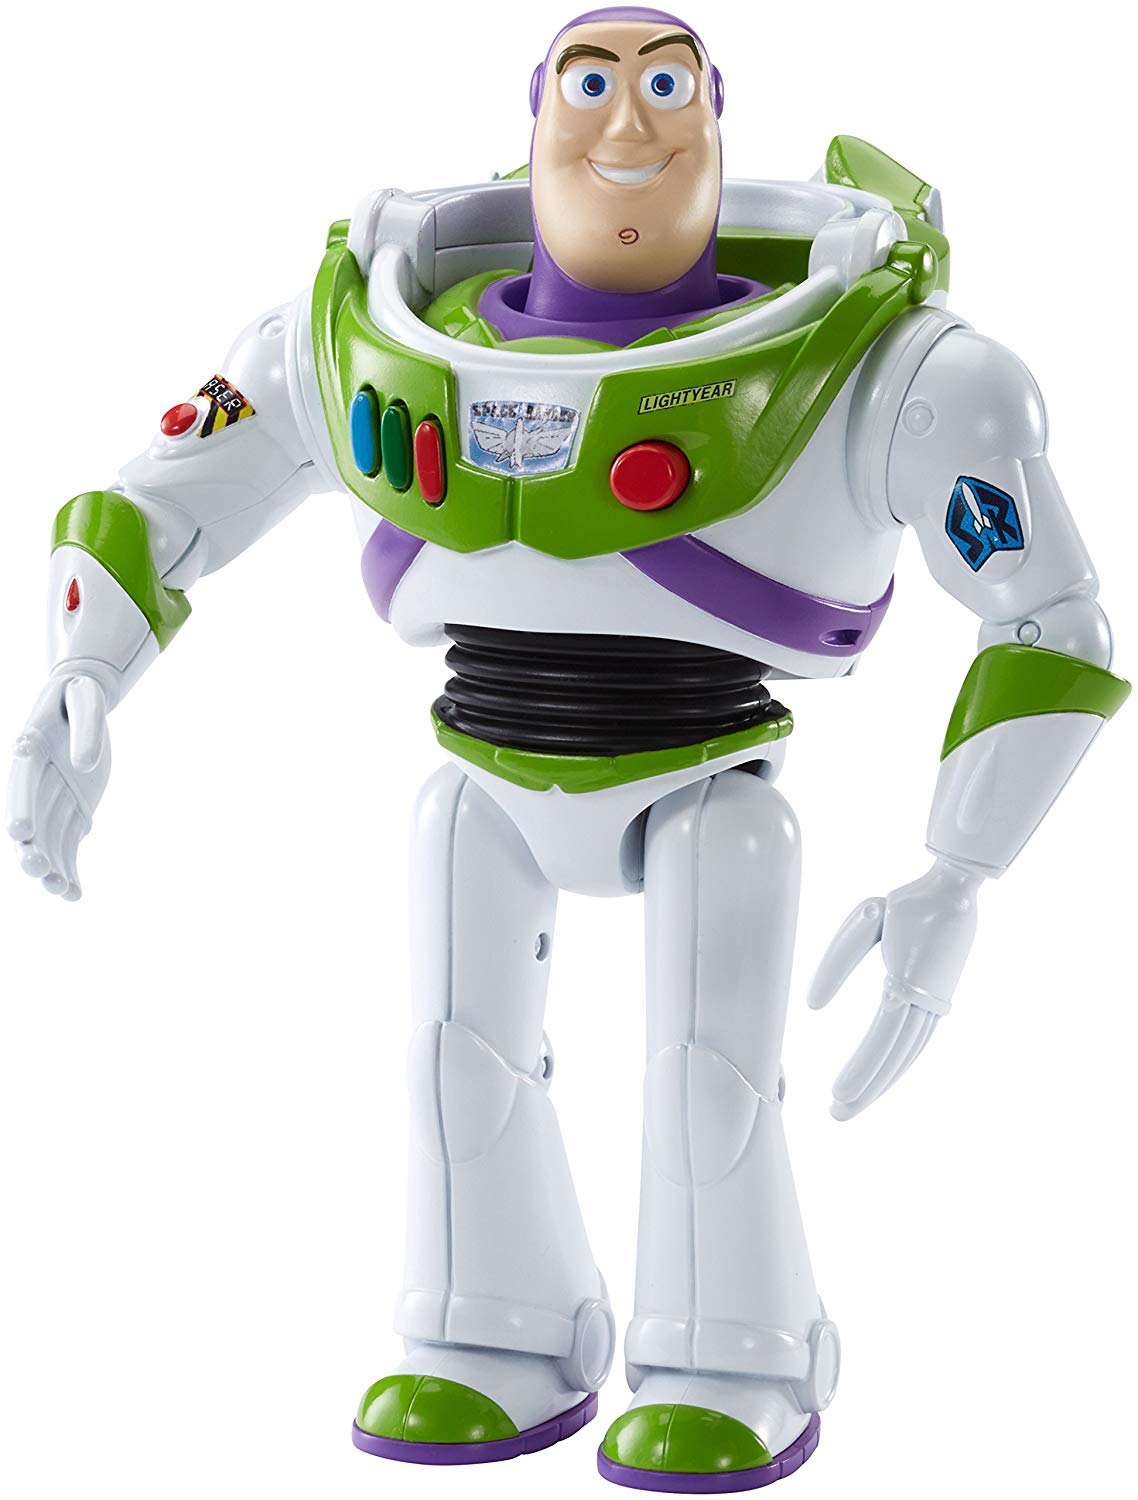 Toy Story 4 Buzz Lightyear personaggi characters moto disney pixar film di animazione 2019